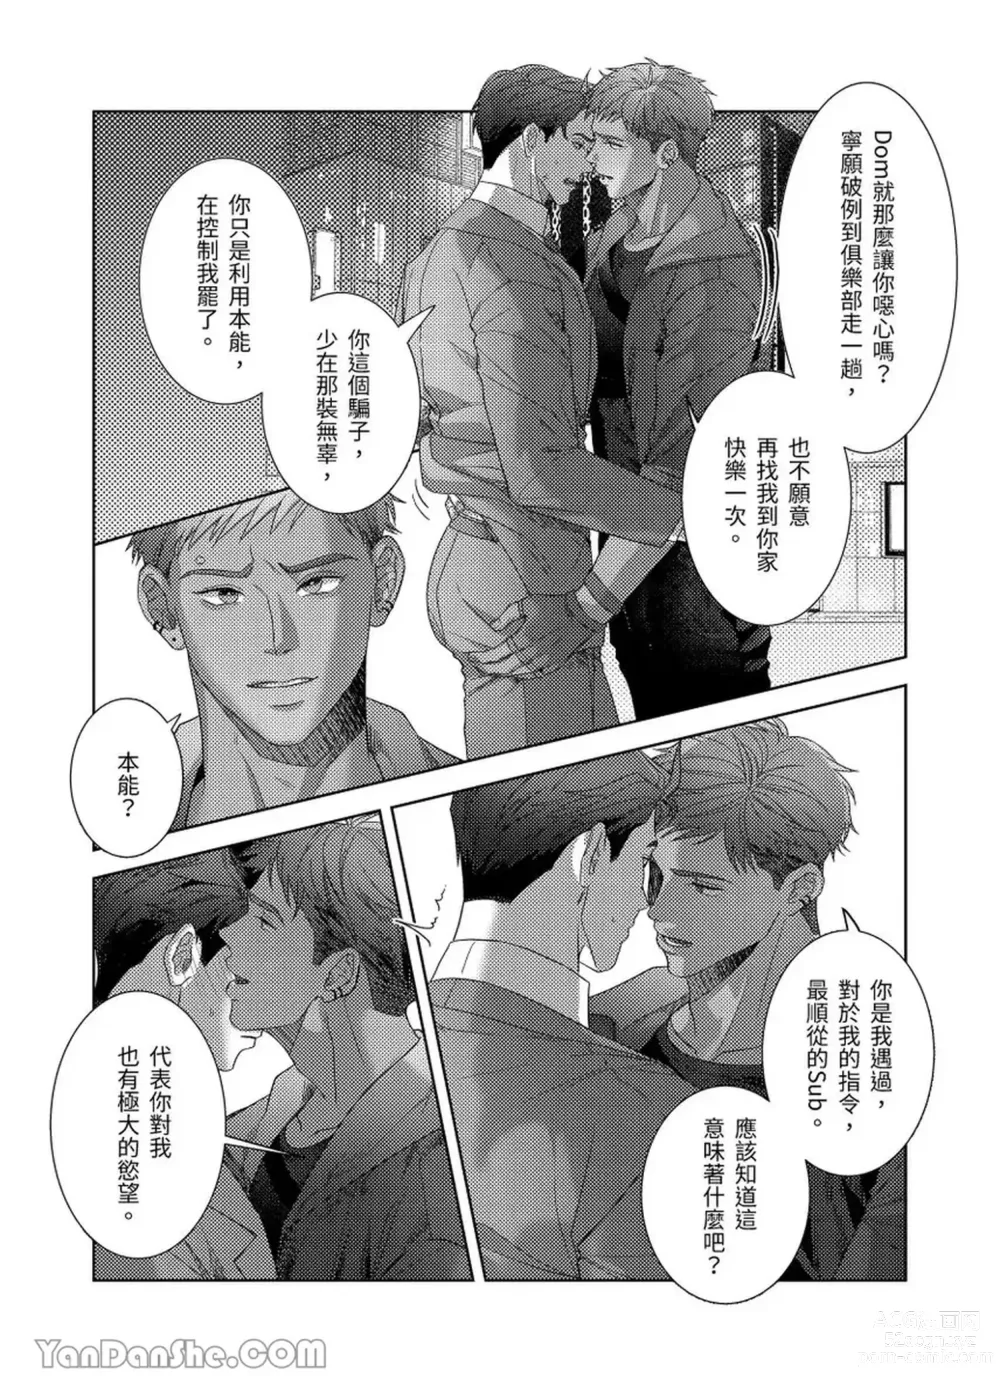 Page 43 of manga Dom&Sub